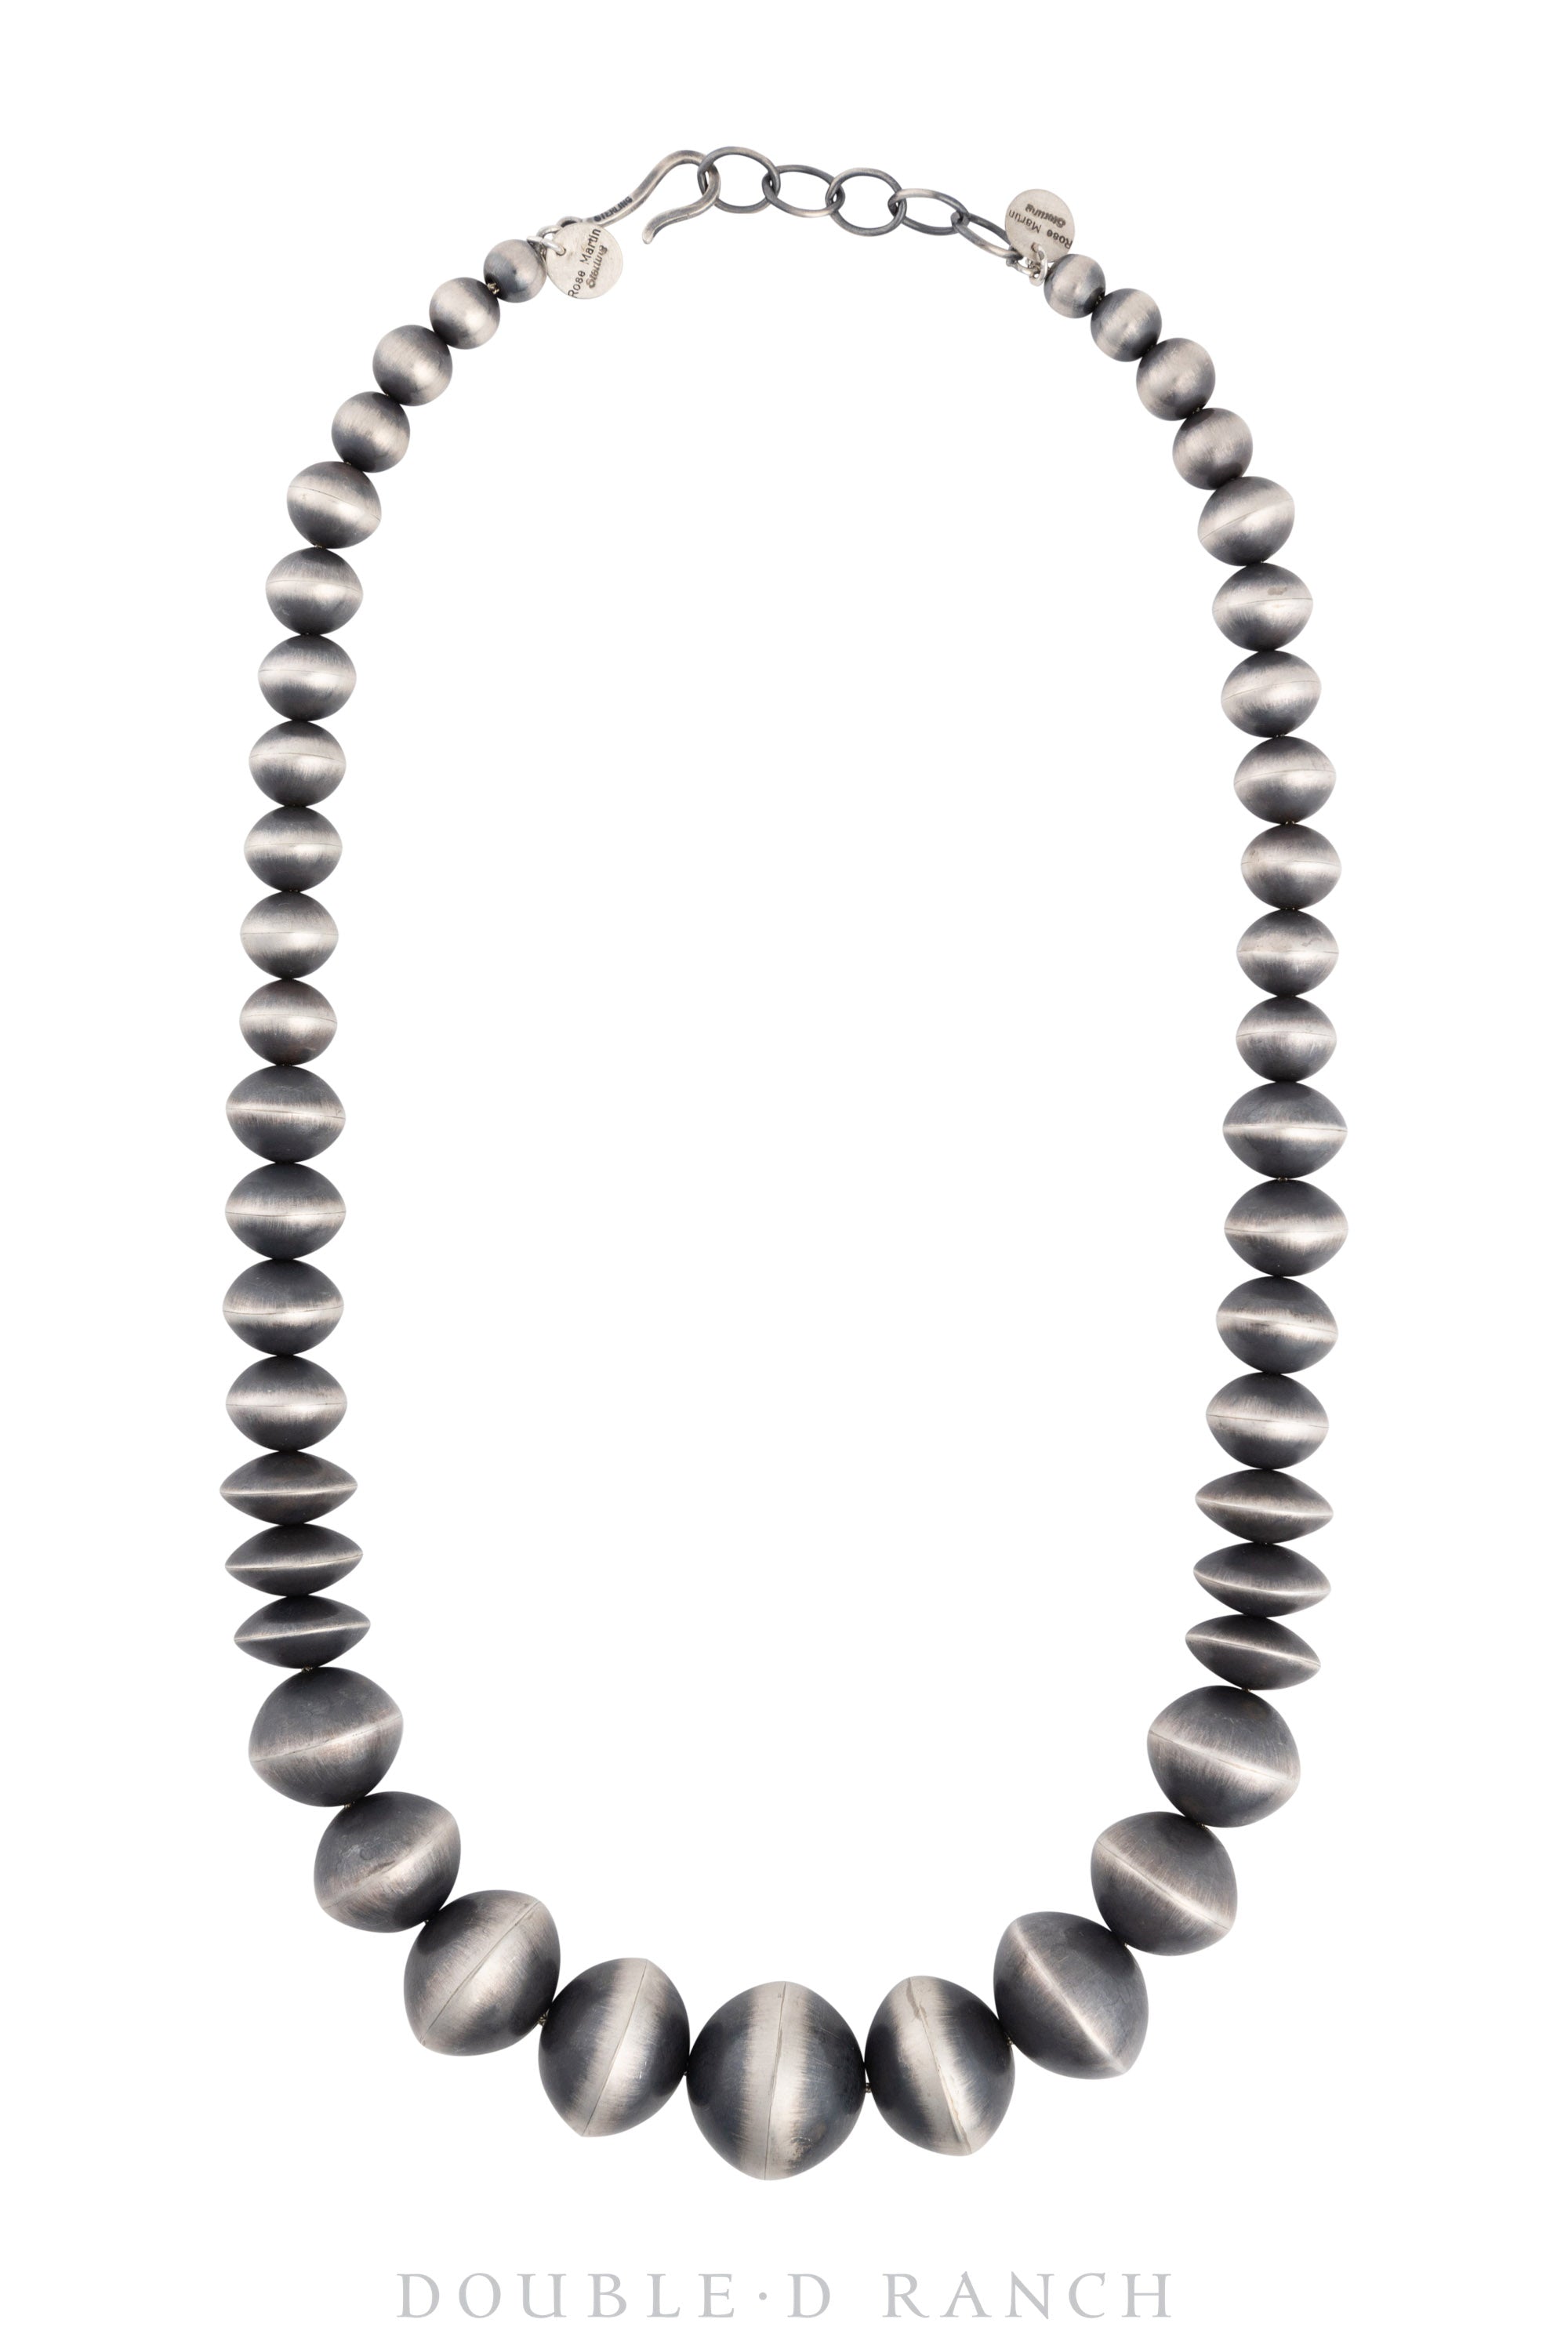 Necklace, Desert Pearls, Sterling Silver, Single Strand, Graduated 22", Hallmark, Contemporary, 3109